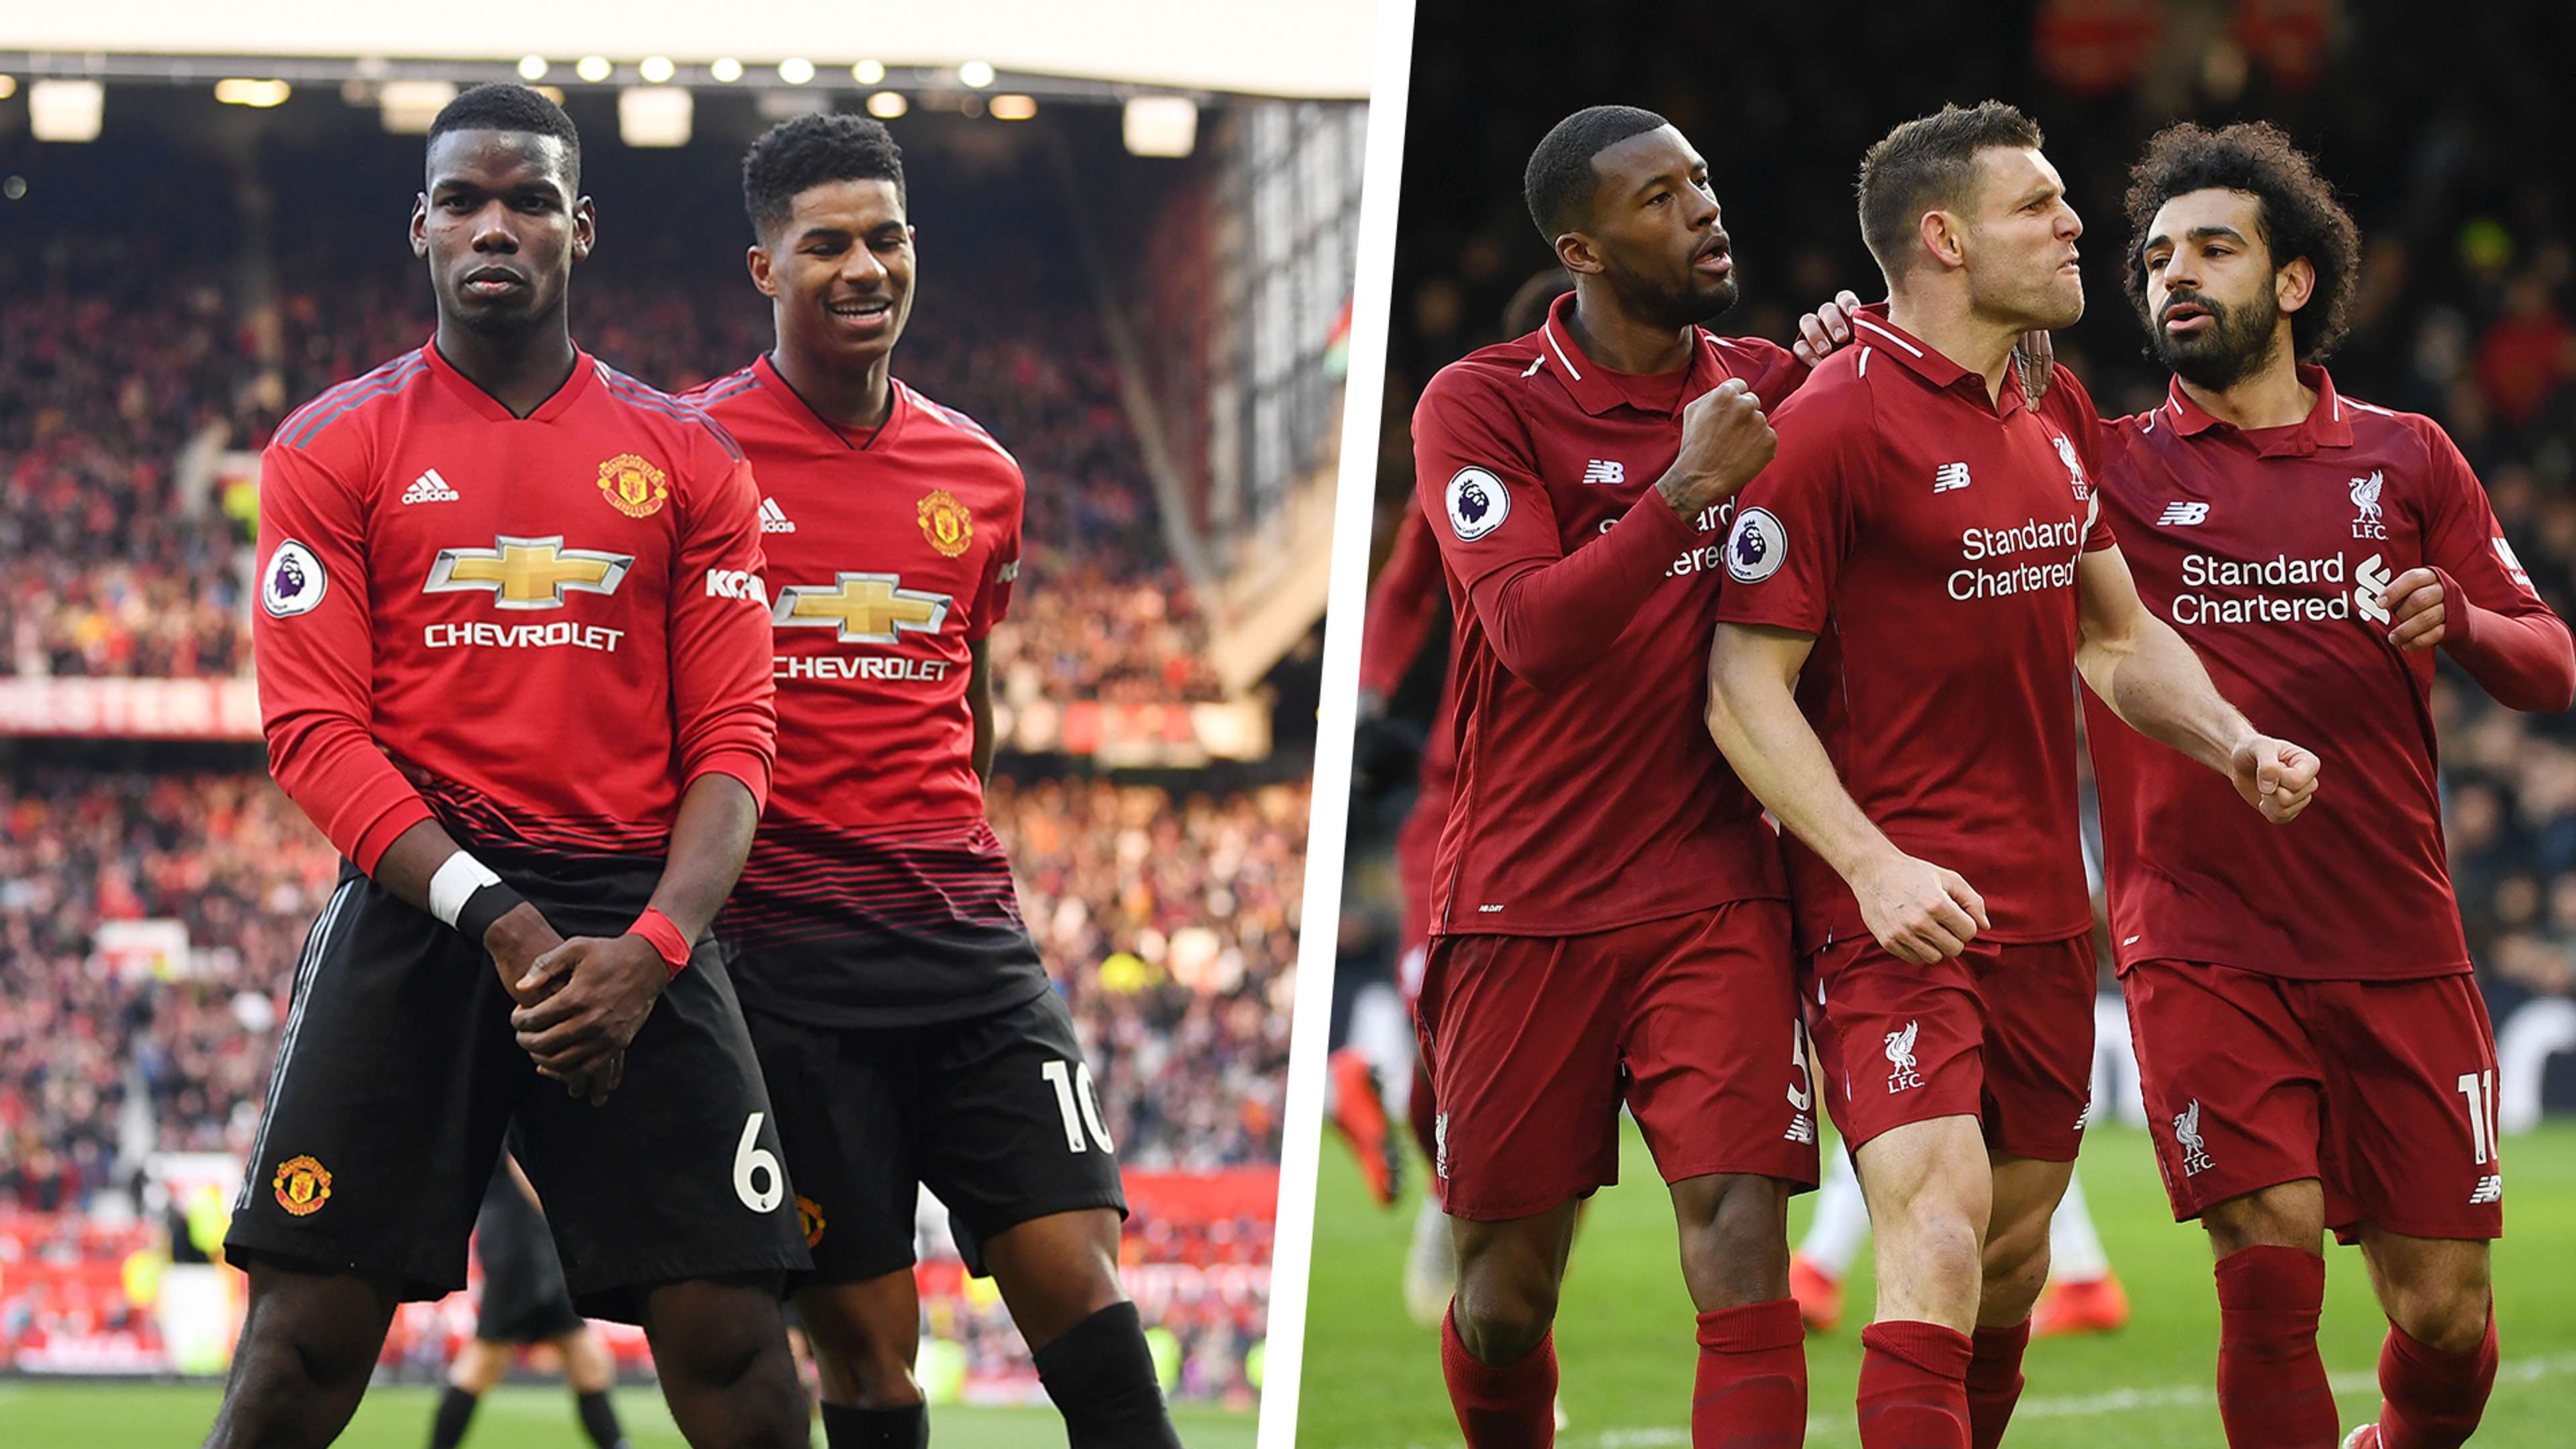 Mohamed Salah Paul Pogba James Milner penalties Liverpool Manchester United 2018-19